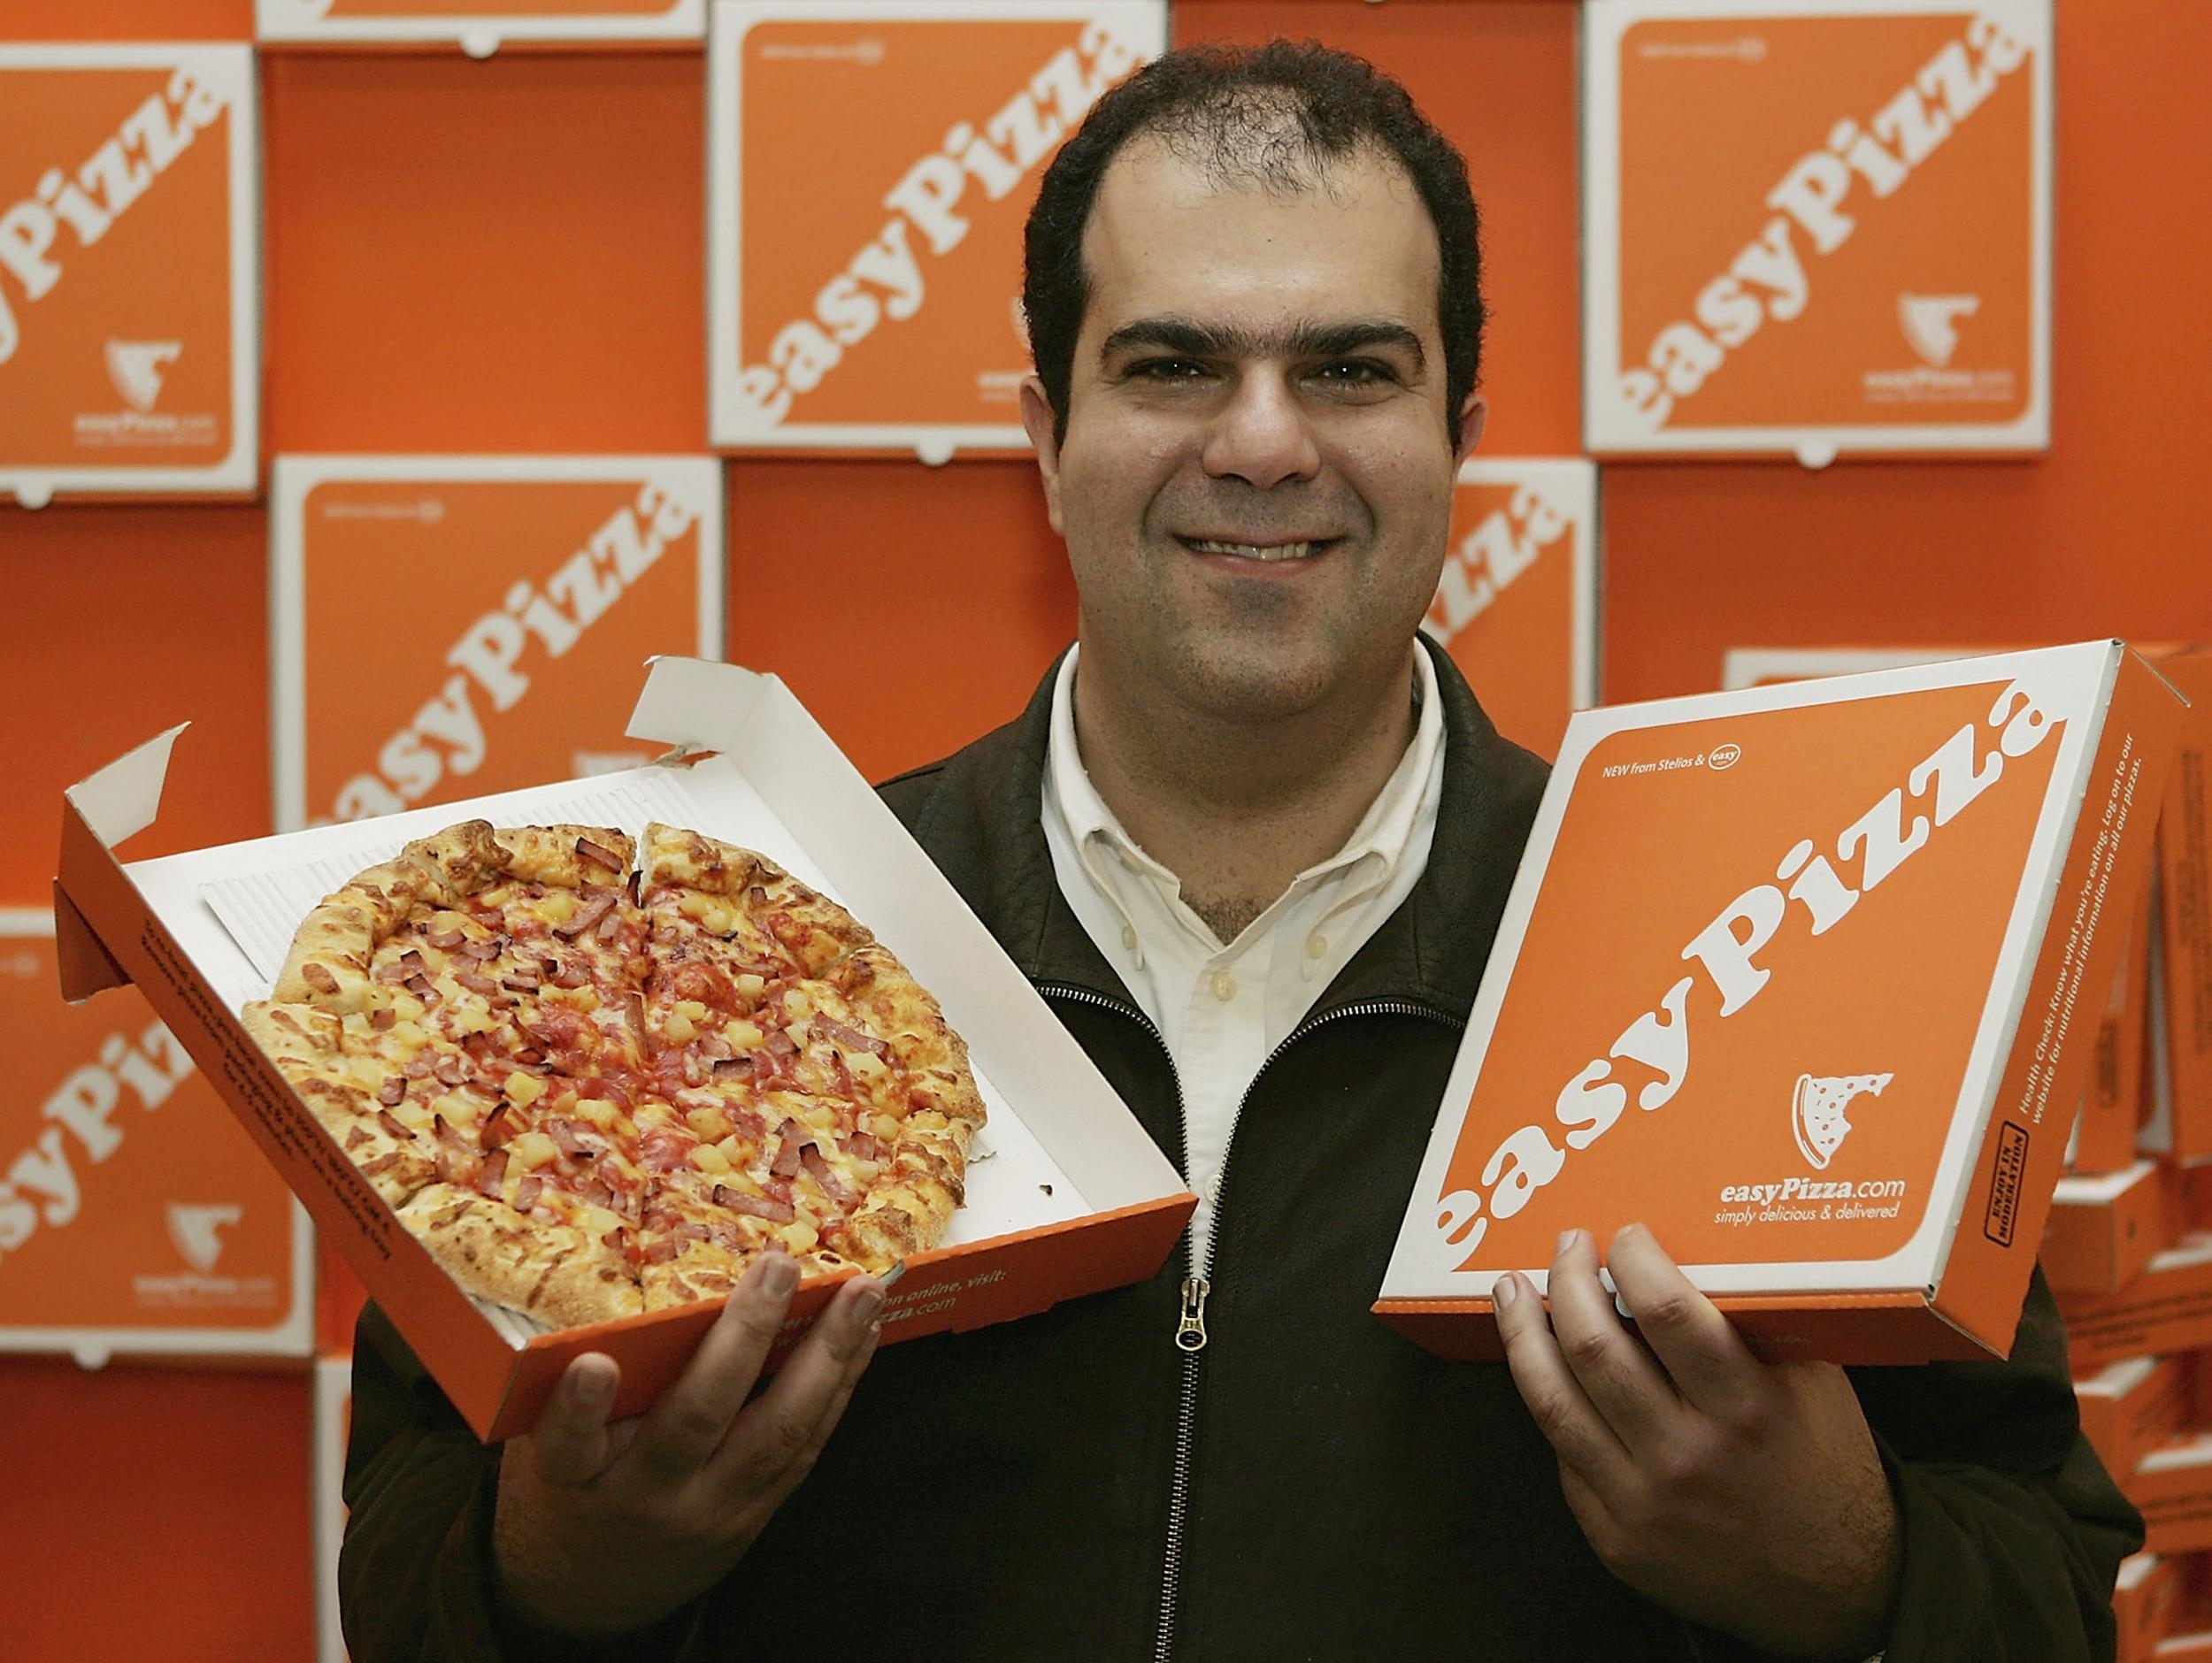 Entrepreneur Stelios Haji-Ioannou launched easyPizza in Milton Keynes in 2004